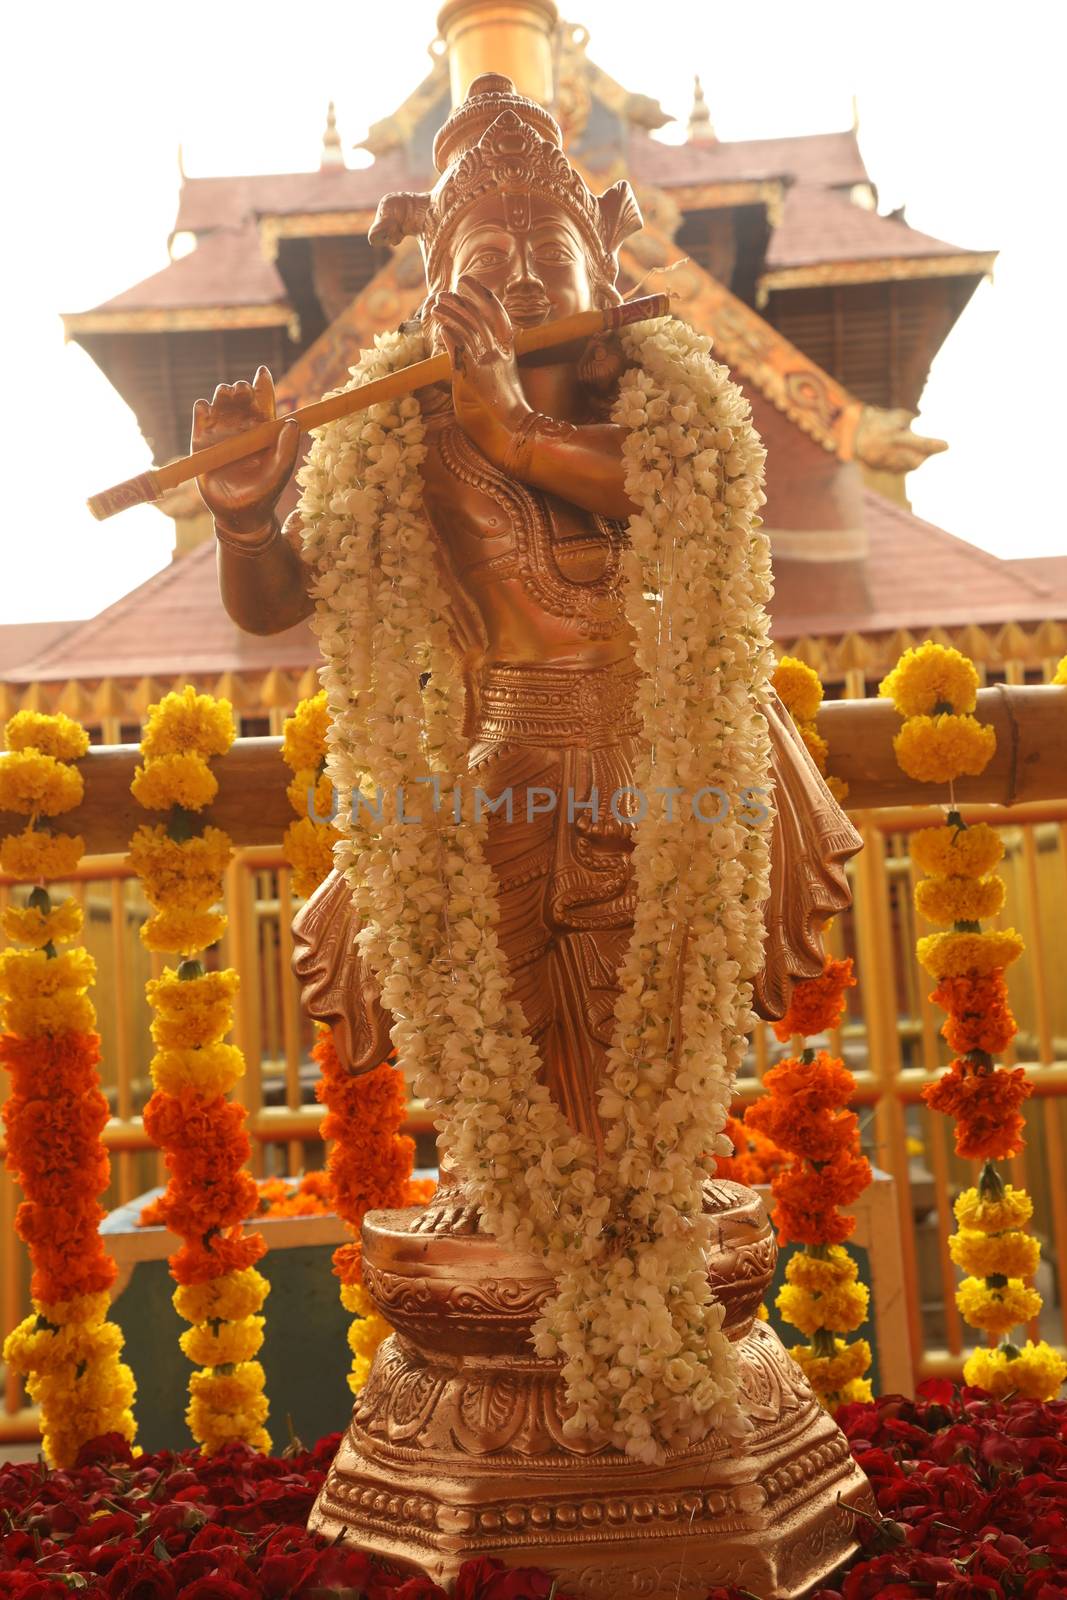 Hindu God Statue in a Temple by rajastills